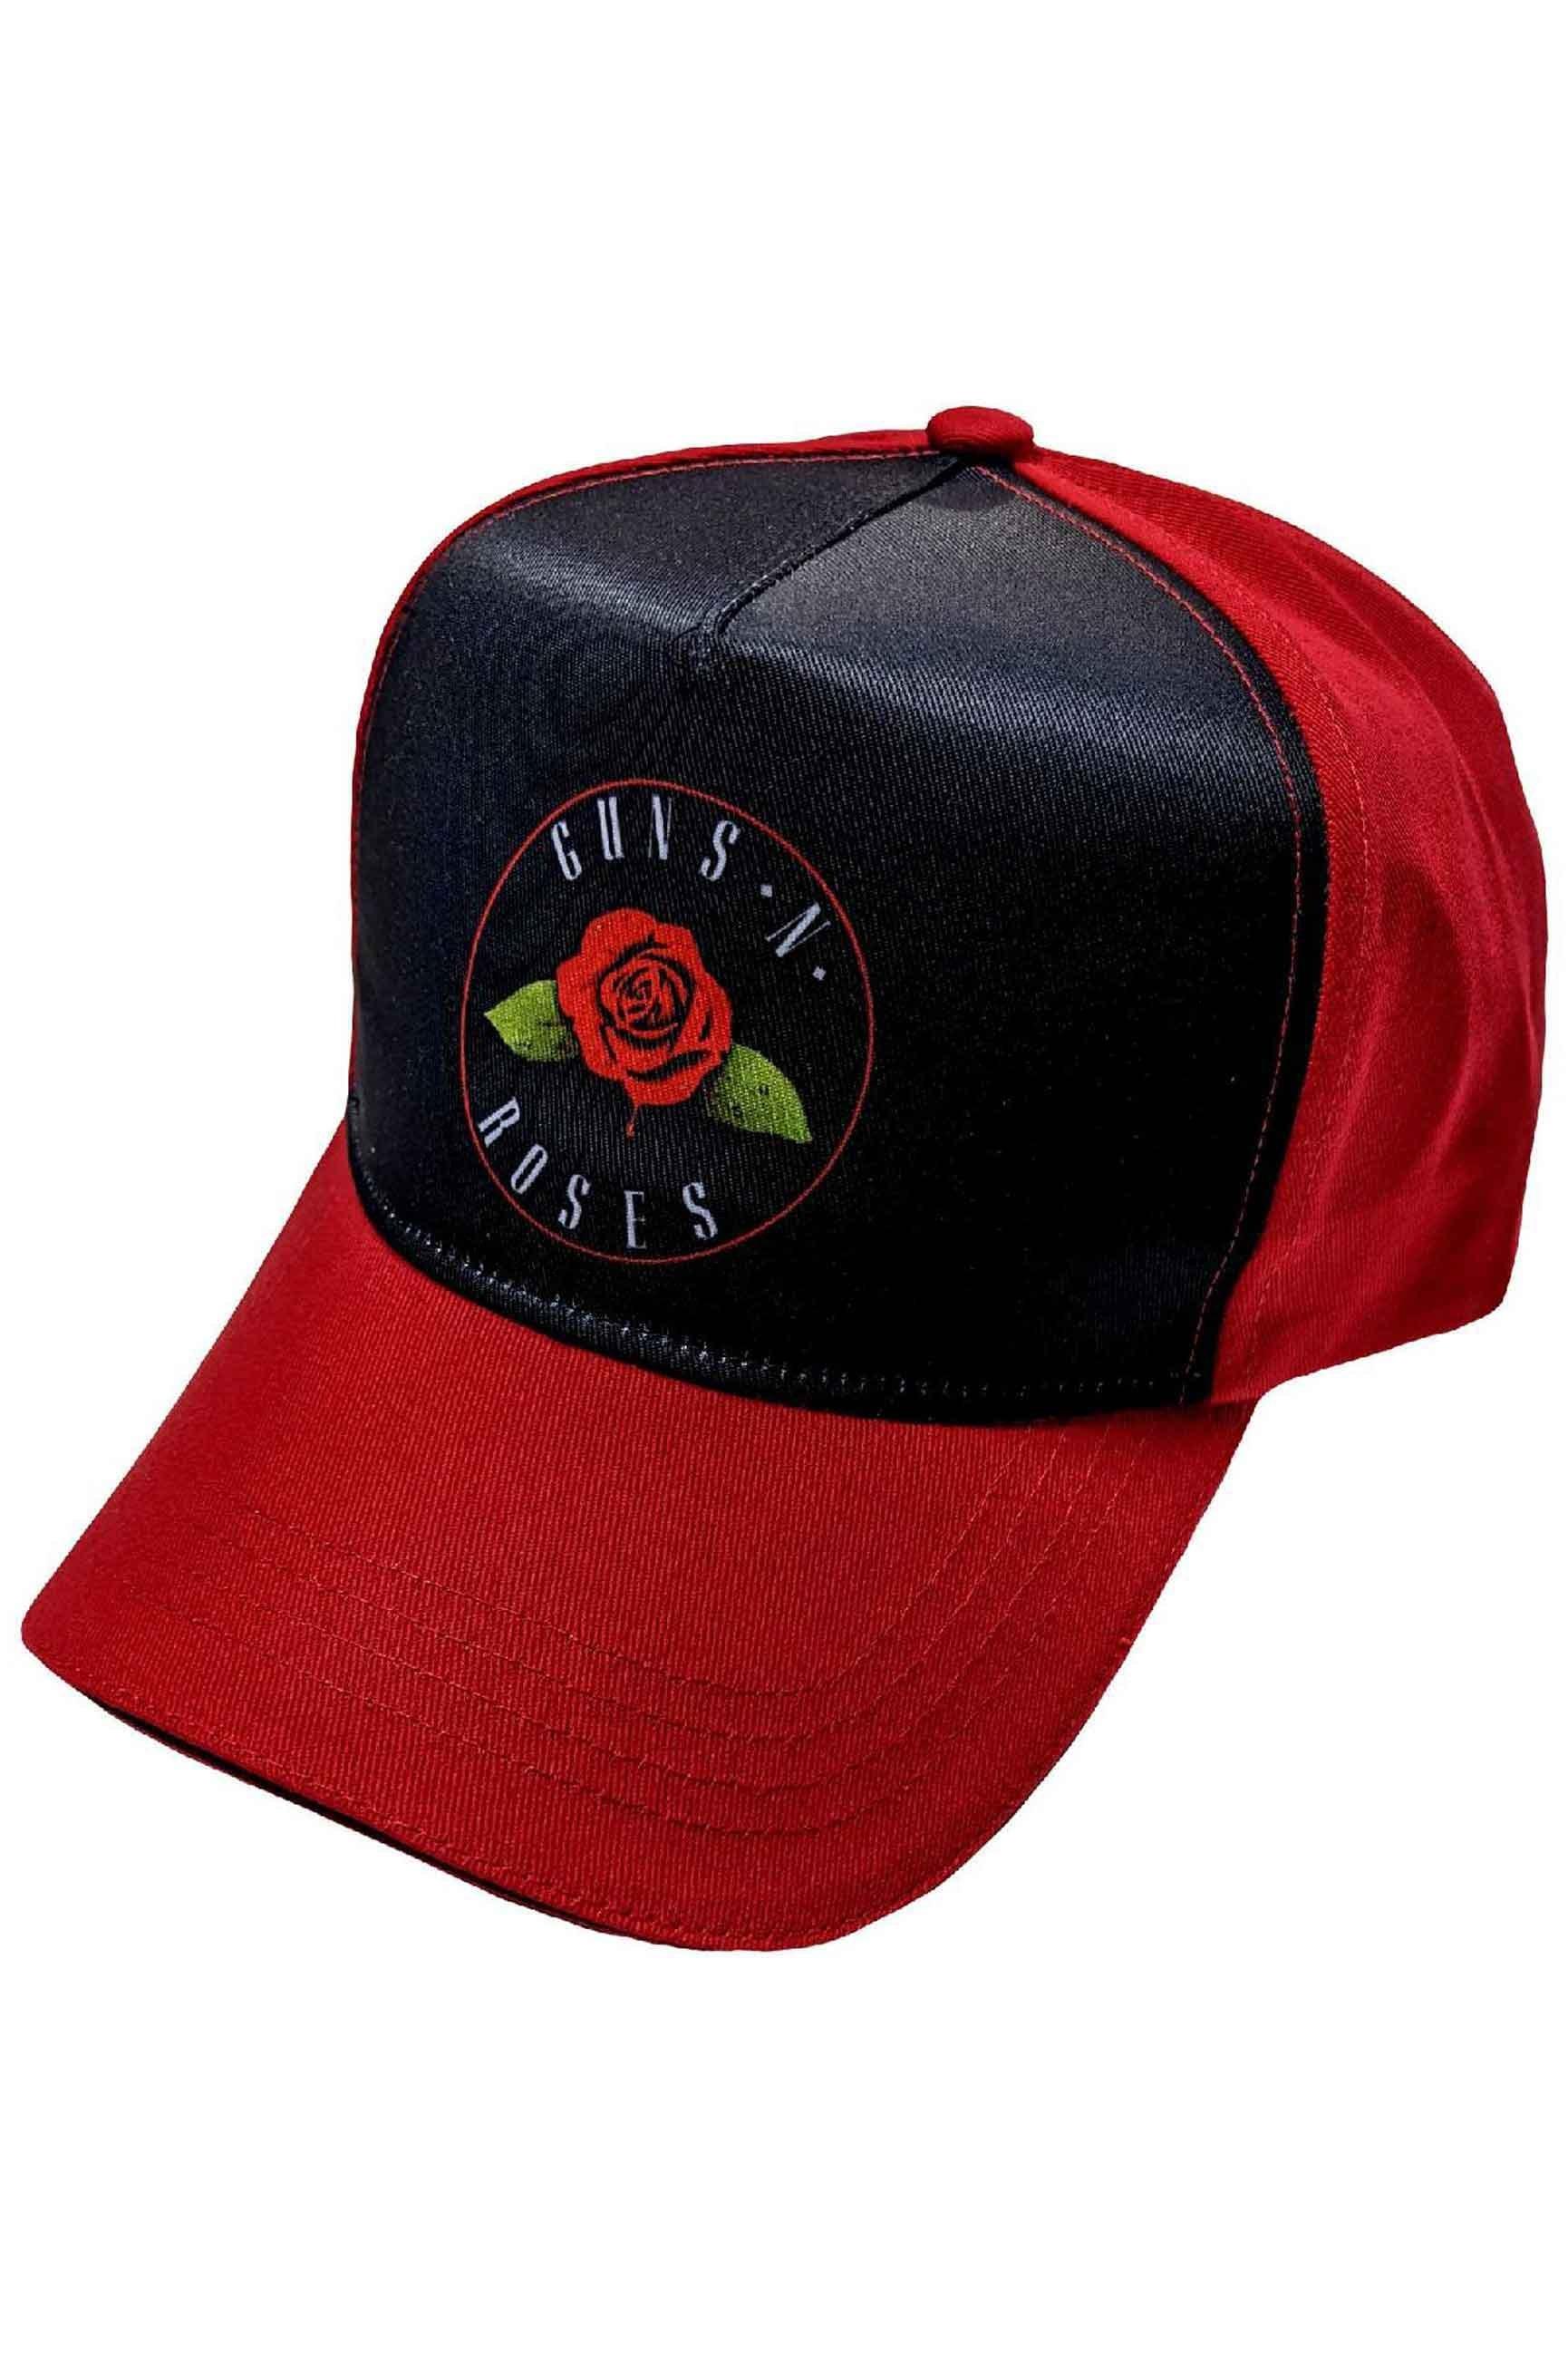 Бейсбольная кепка с логотипом Rose Band Guns N Roses, красный бейсболка кепка камуфляжная с желтым принтом guns n’ roses 88